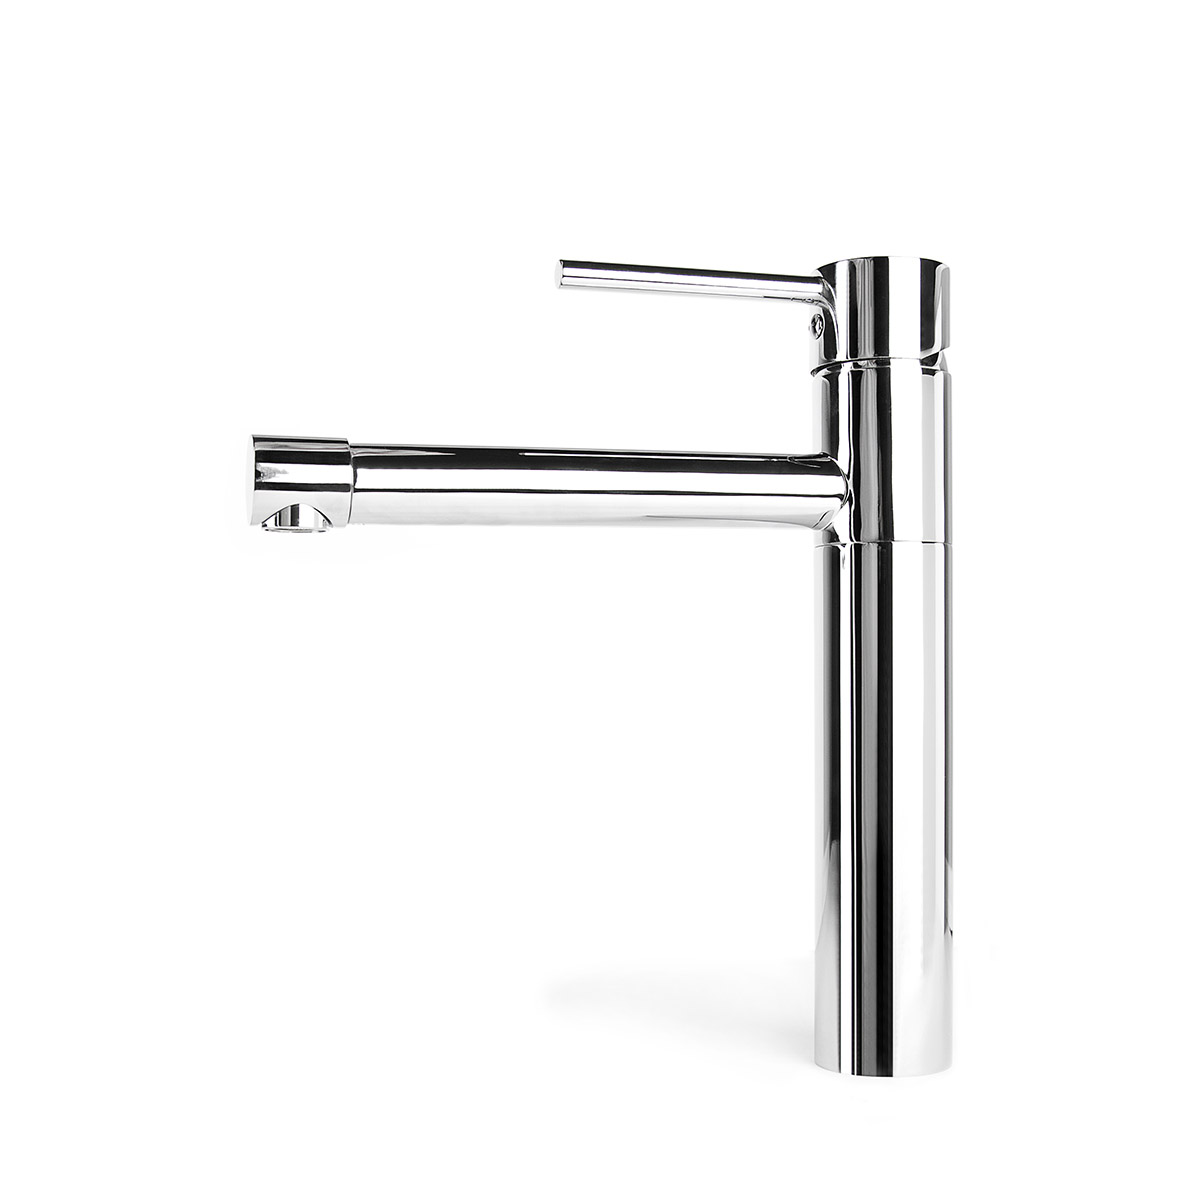 Alva single lever kitchen tap in chrome